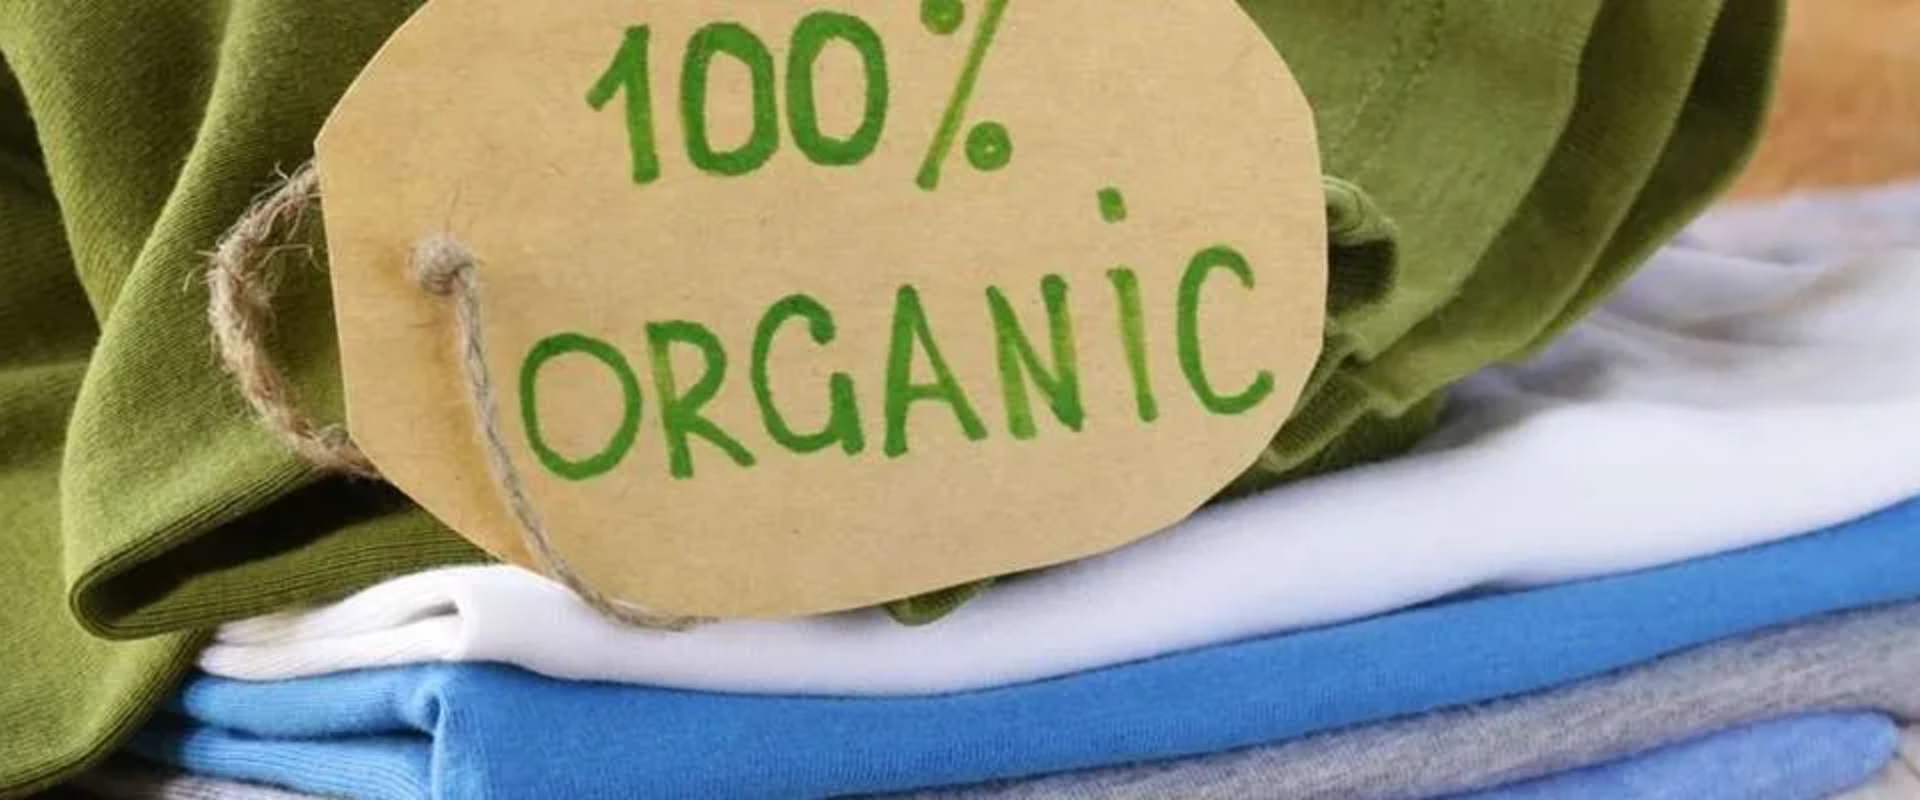 Organic Clothing Benefits